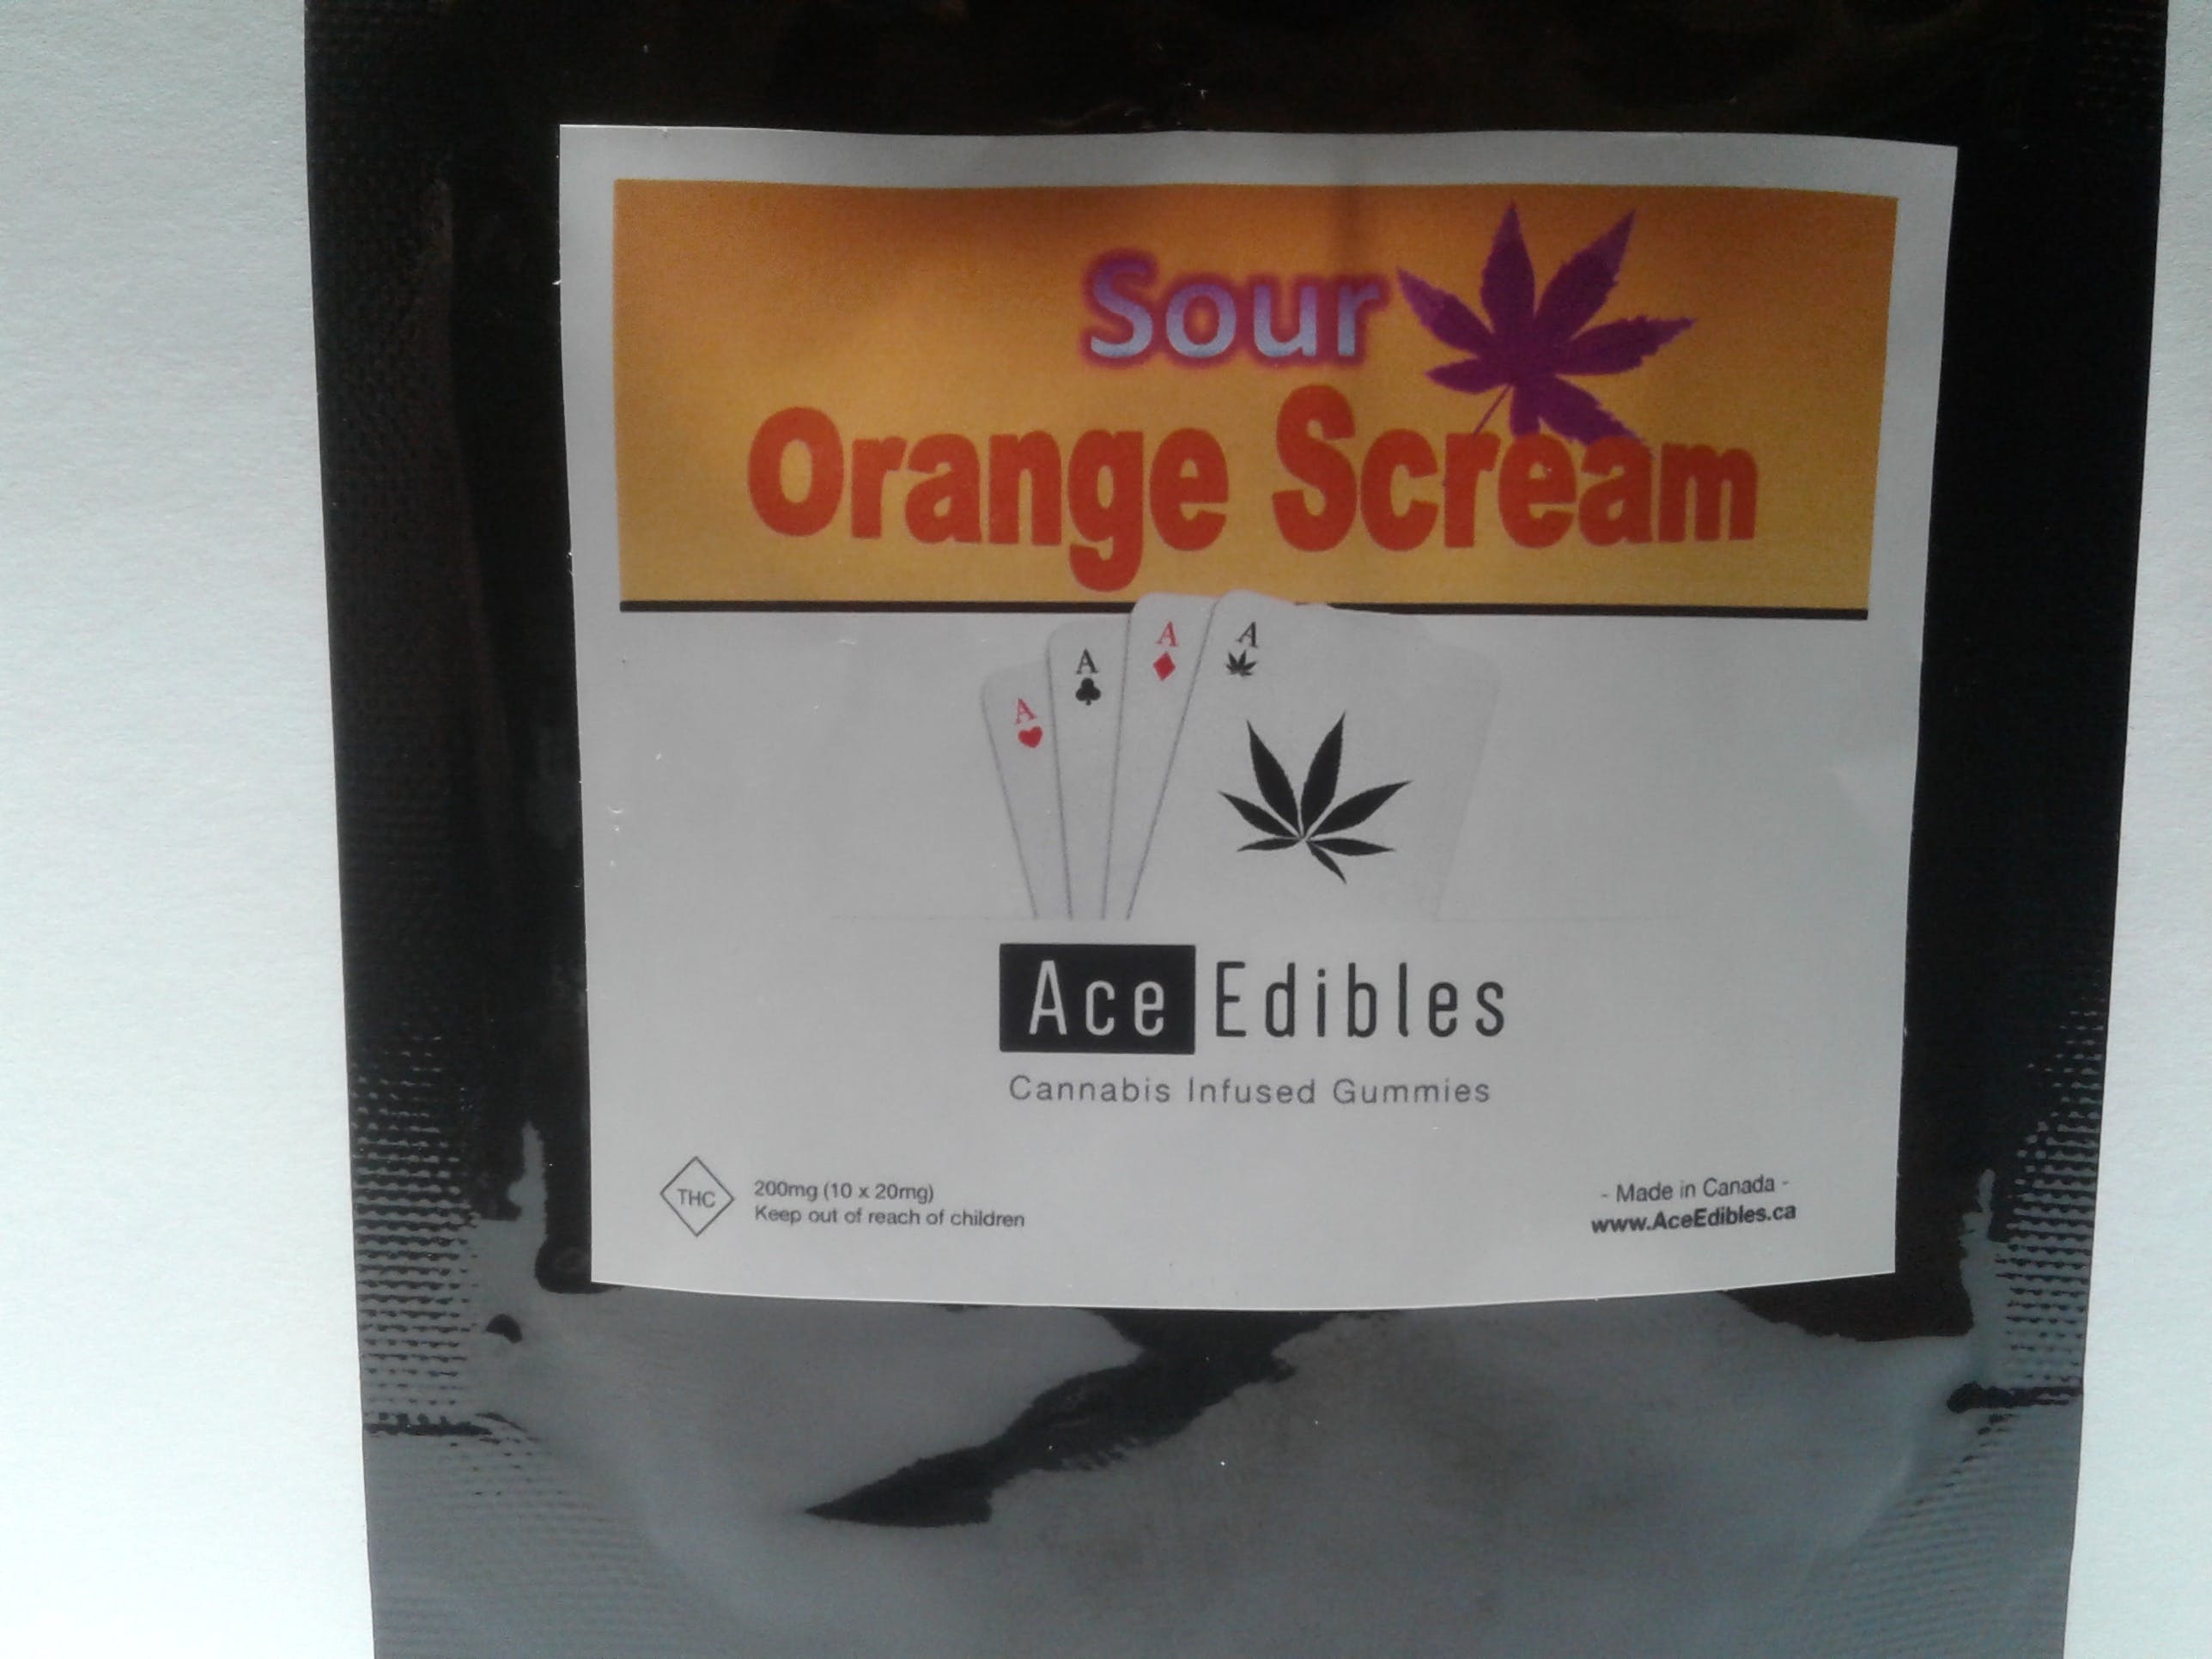 edible-ace-edibles-orange-scream-sour-line-ace-edibles-10-20mg-pieces